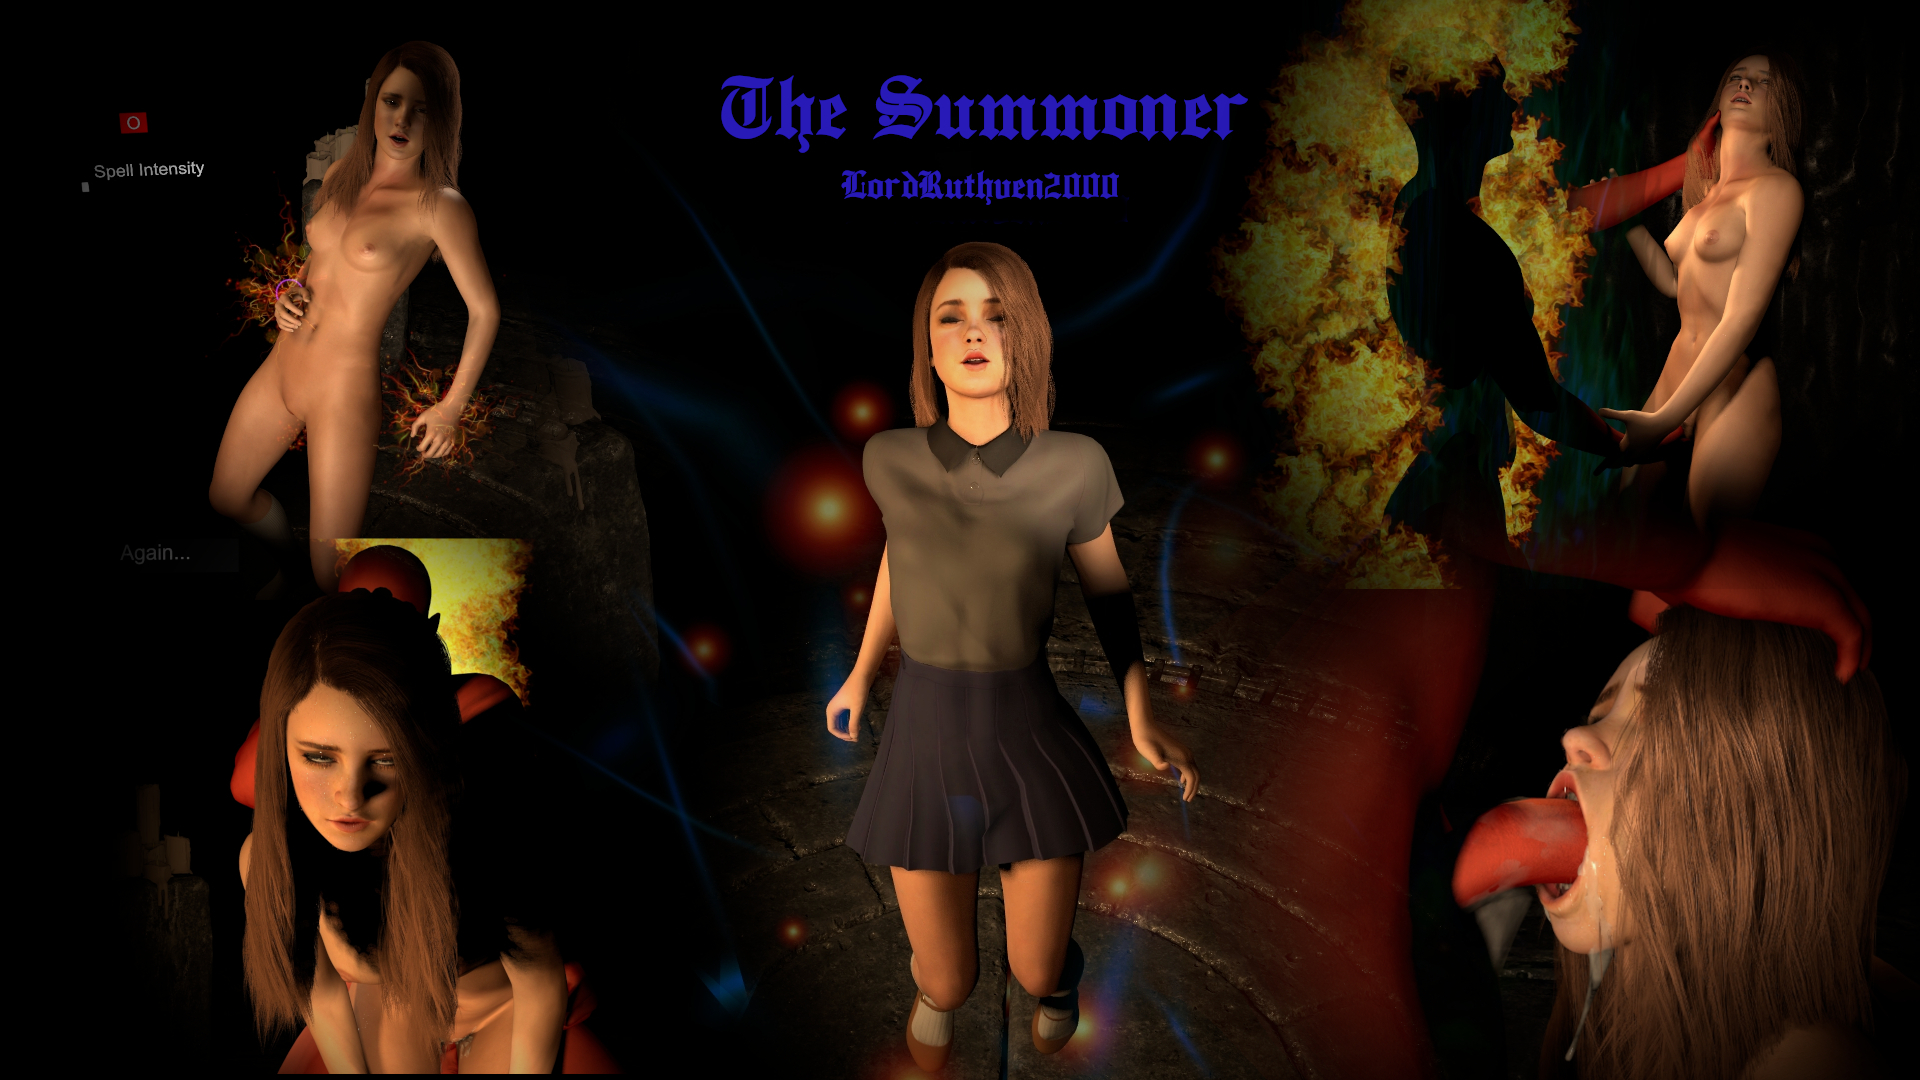 The_summoner_promo.jpg